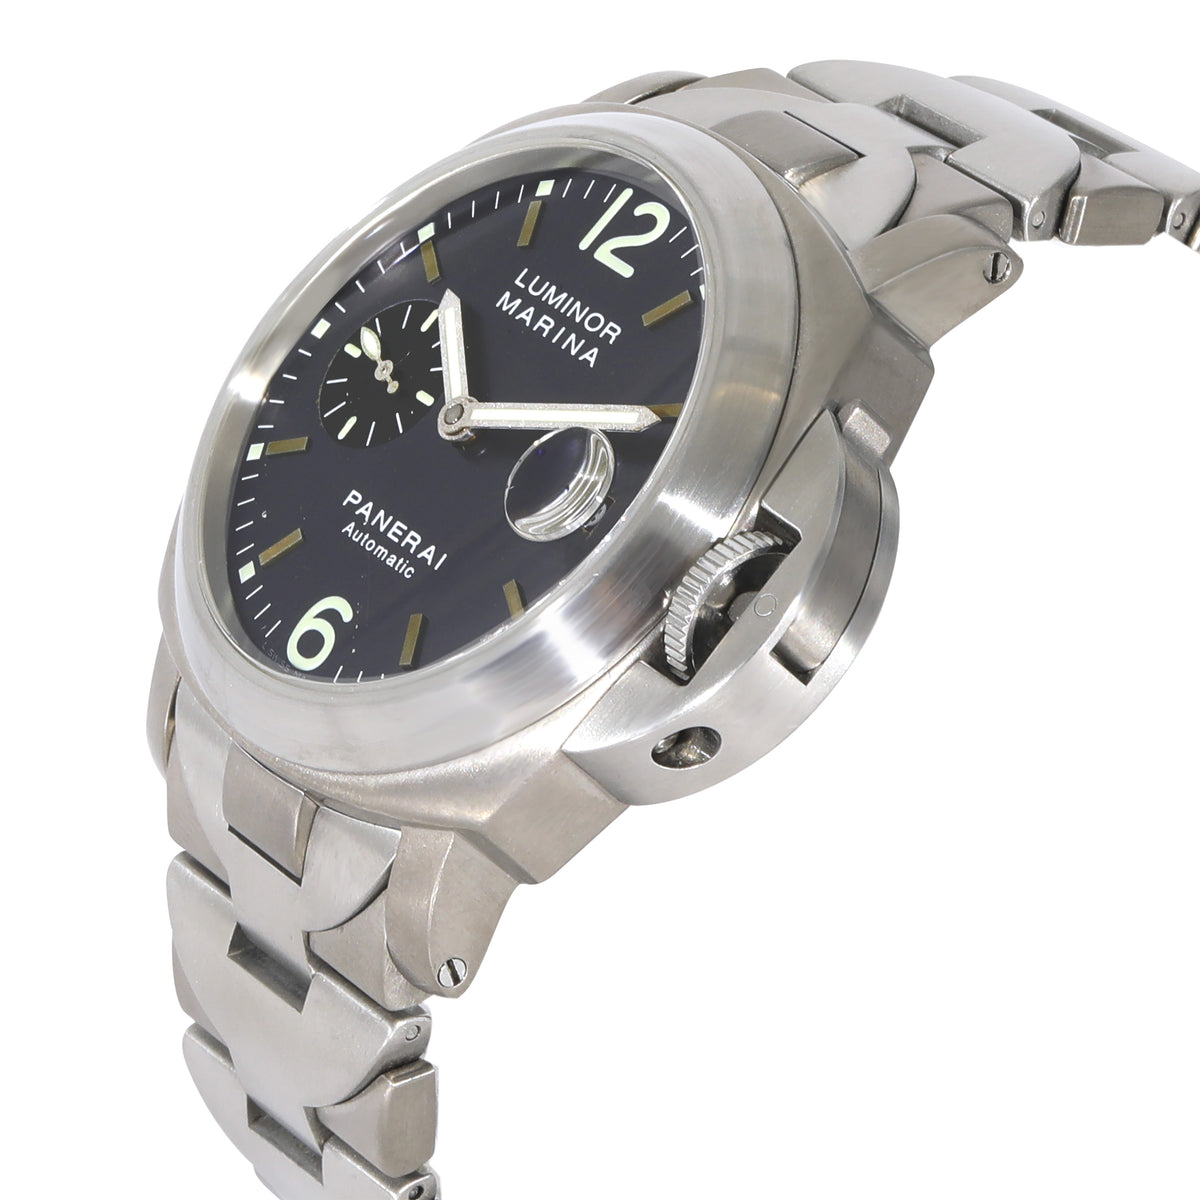 Luminor Marina PAM00091 Men's Watch in  Titanium